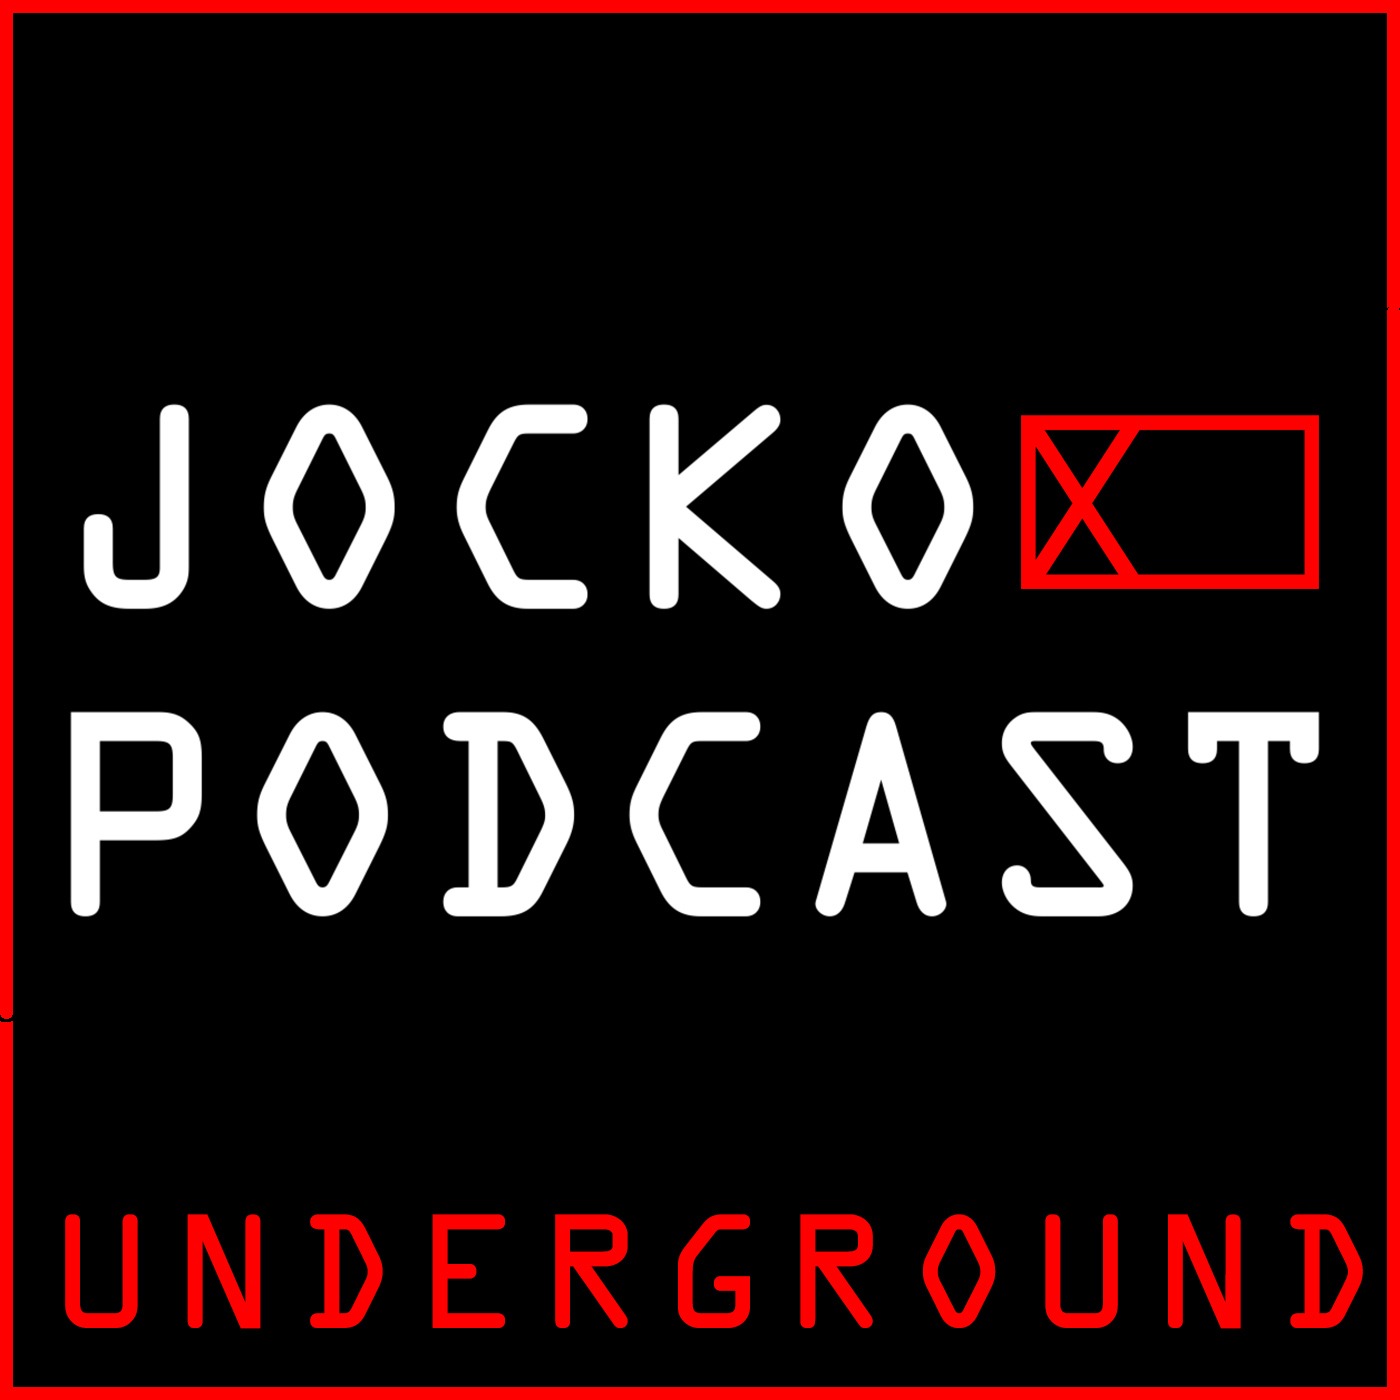 Jocko Underground: Don't Trust The "Breaking News". People Get Under Your Skin. Regret.